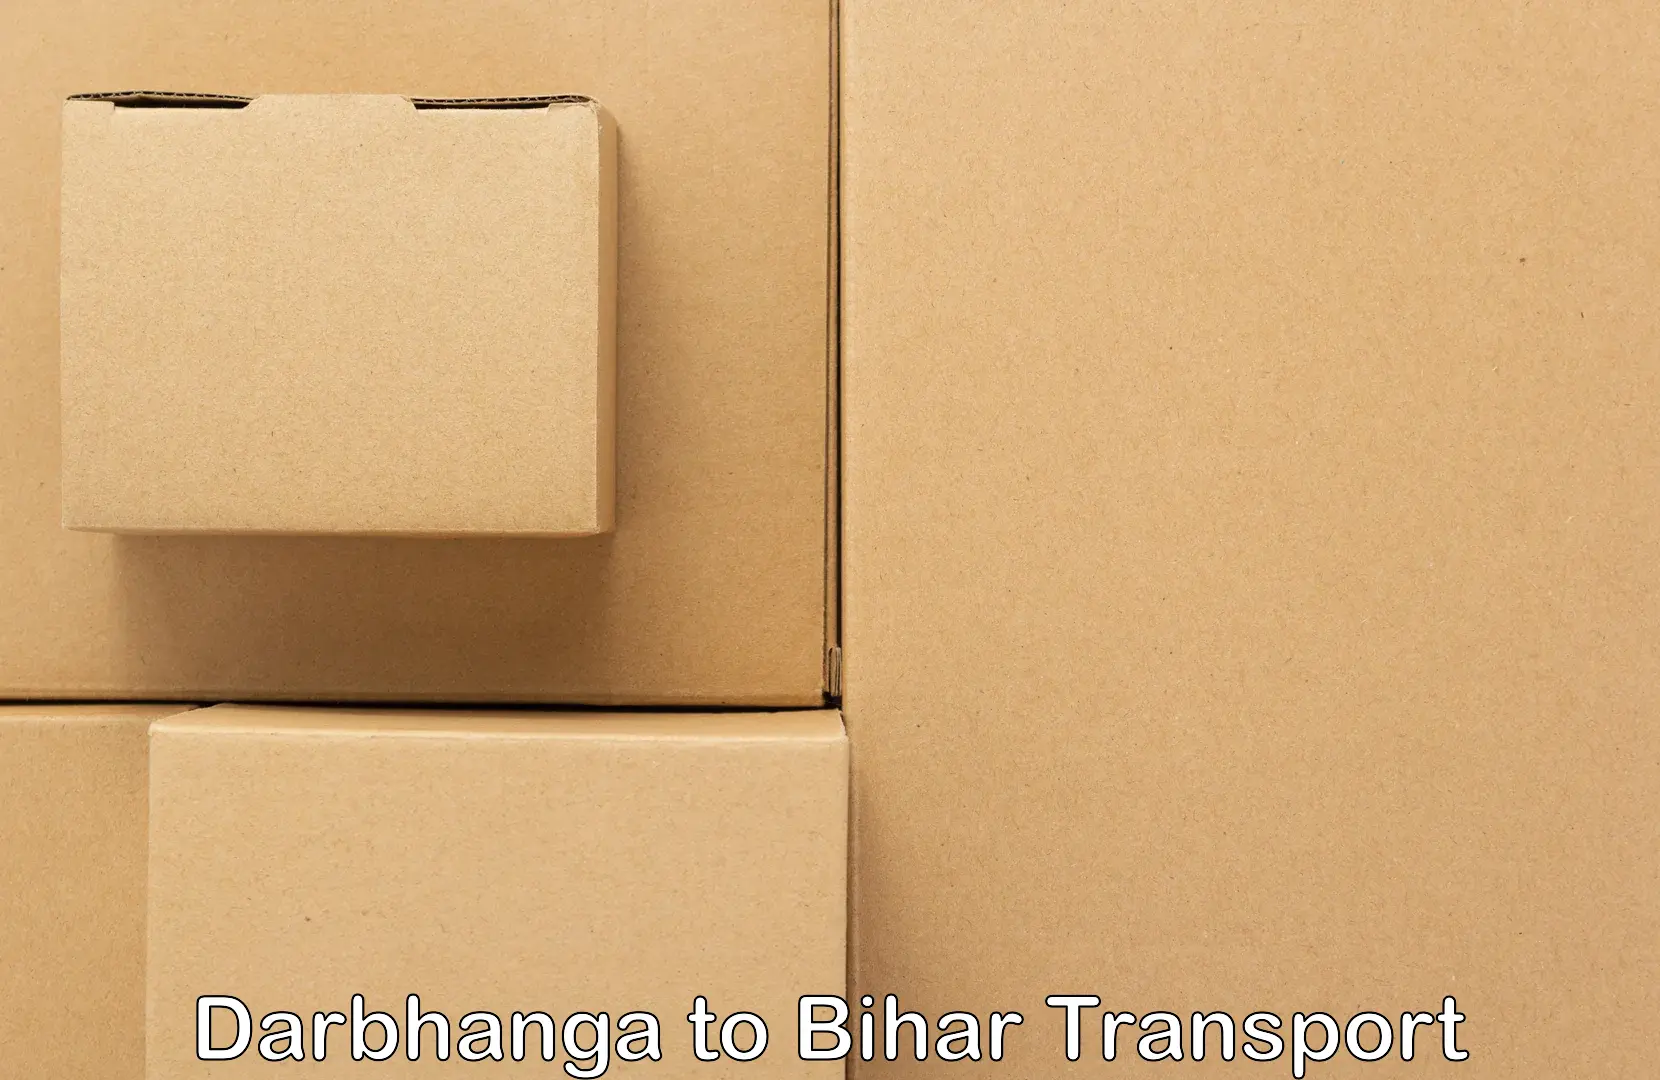 Truck transport companies in India Darbhanga to Jagdishpur Bhojpur